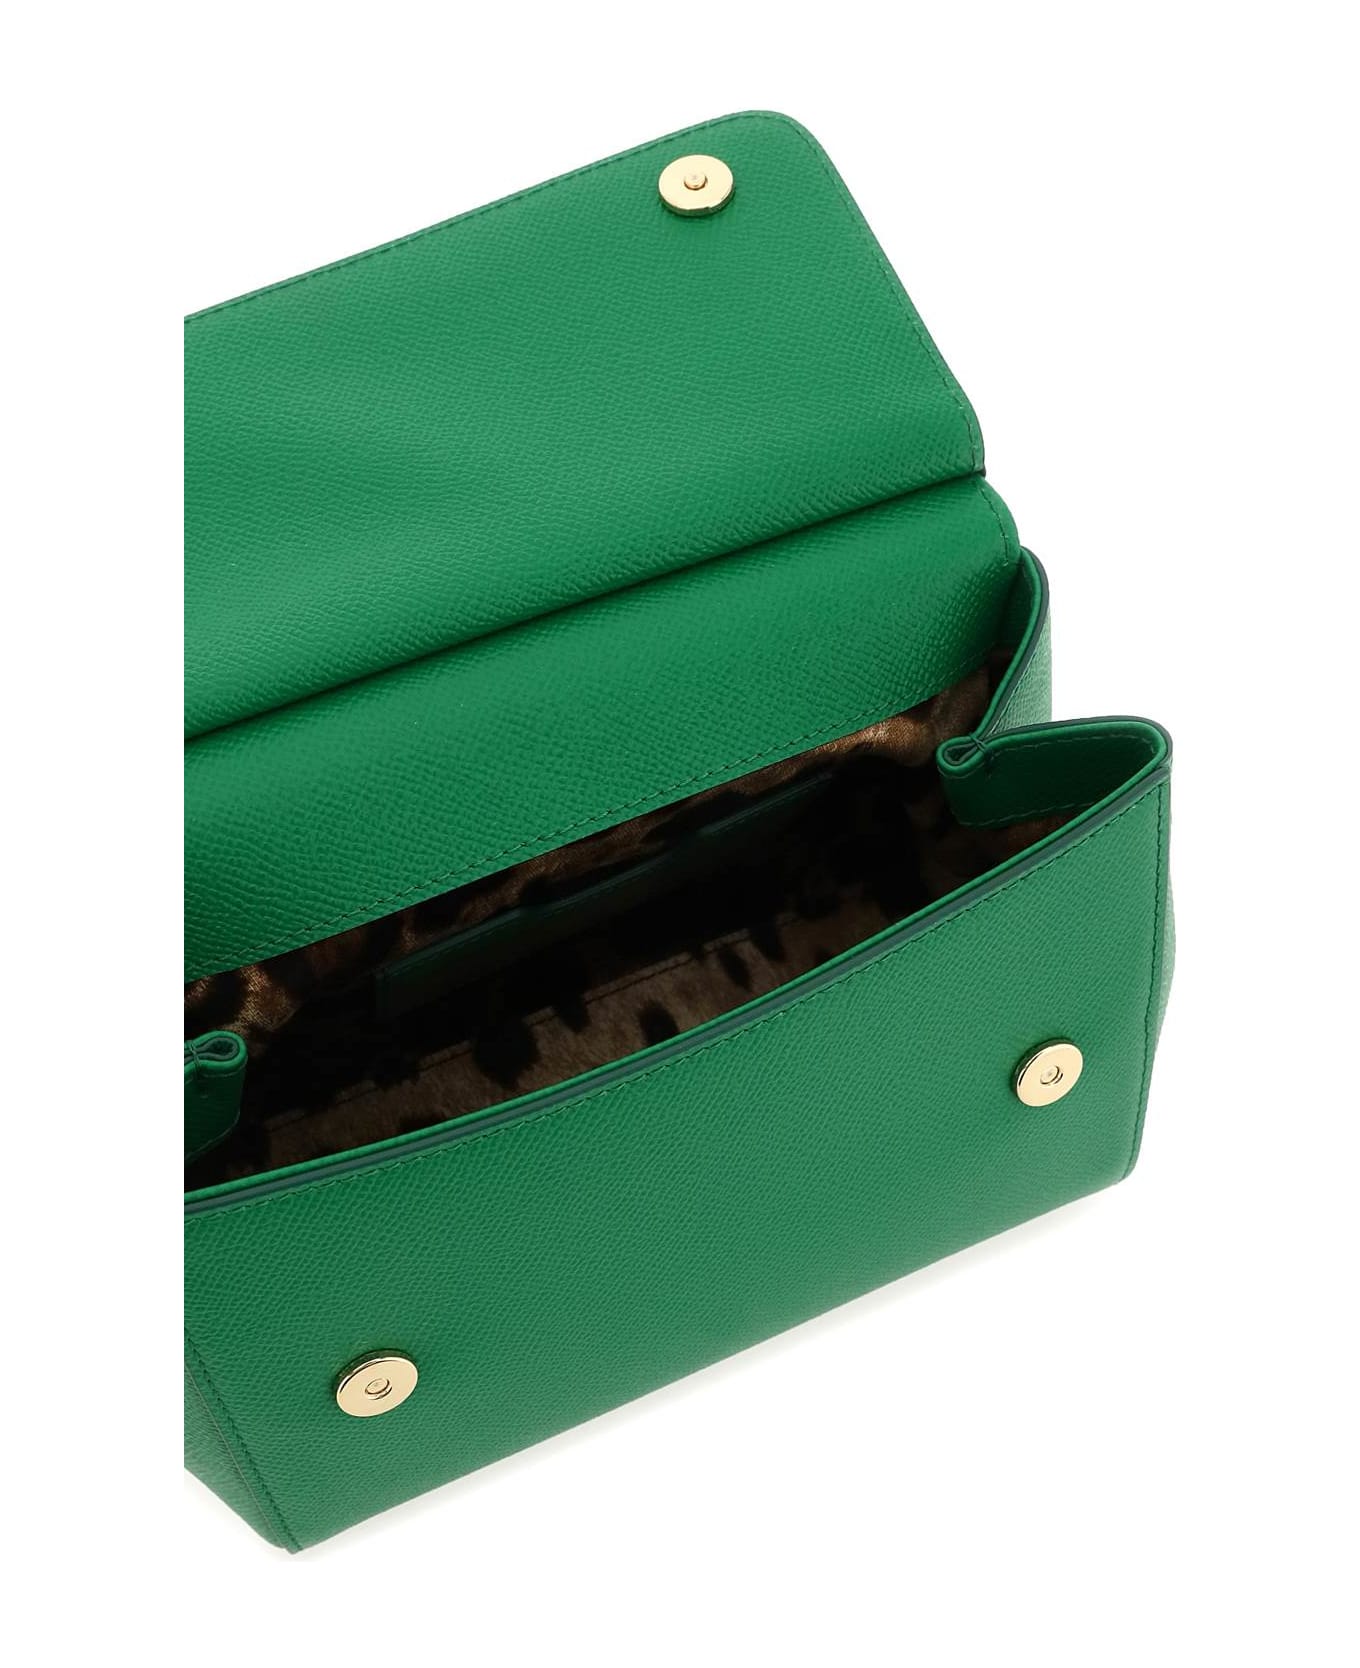 Dolce & Gabbana Sicily Handbag - Green トートバッグ